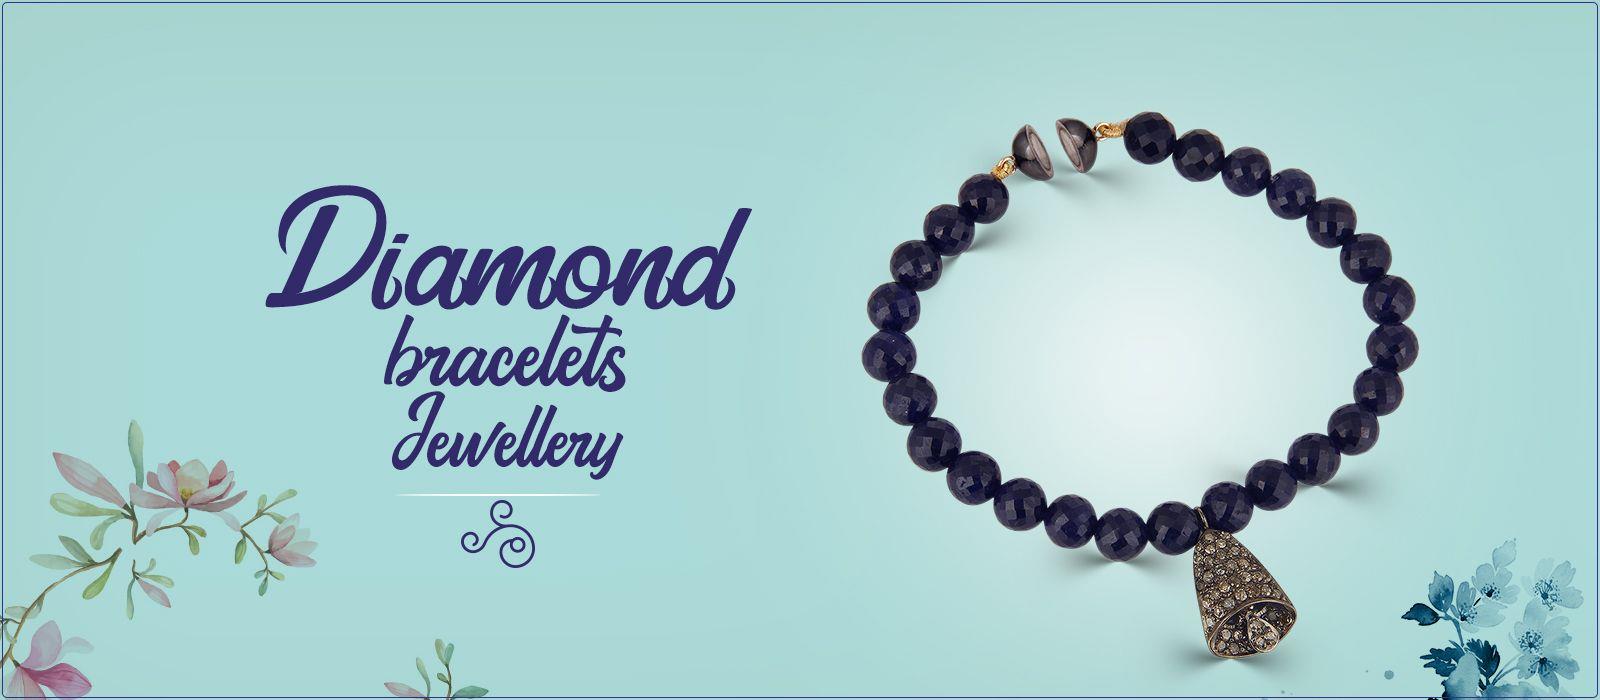 Wholesale diamond bracelets jewelry manufacturer